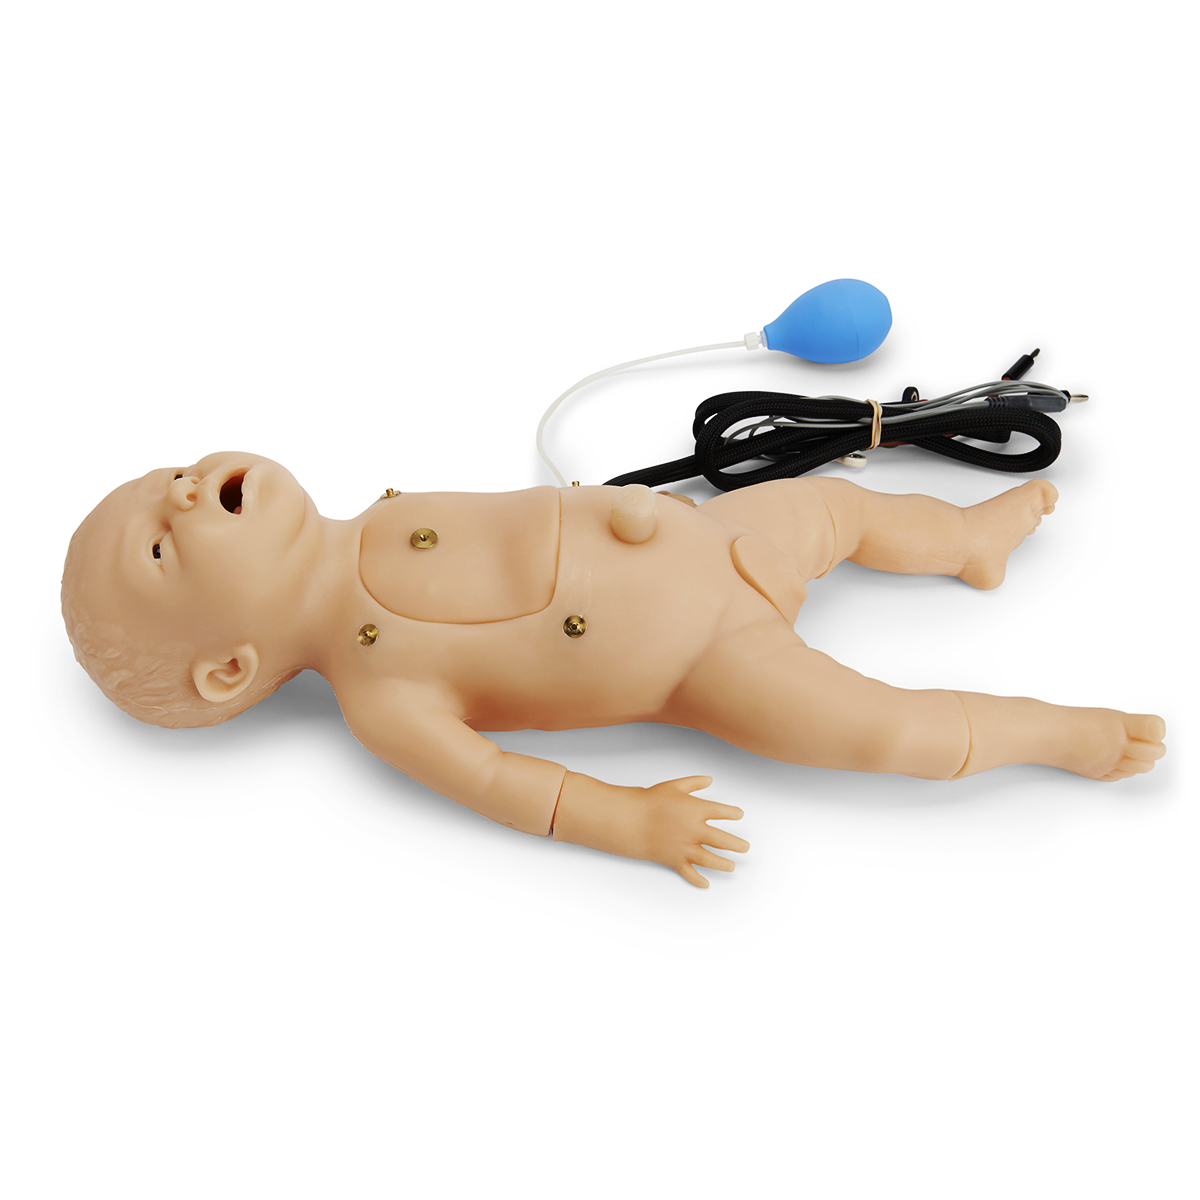 Life/form C.H.A.R.L.I.E. Neugeborenen- Wiederbelebungssimulator ohne interaktiven EKG-Simulator, Bestellnummer 1021584, LF01421U, Nasco Life/form